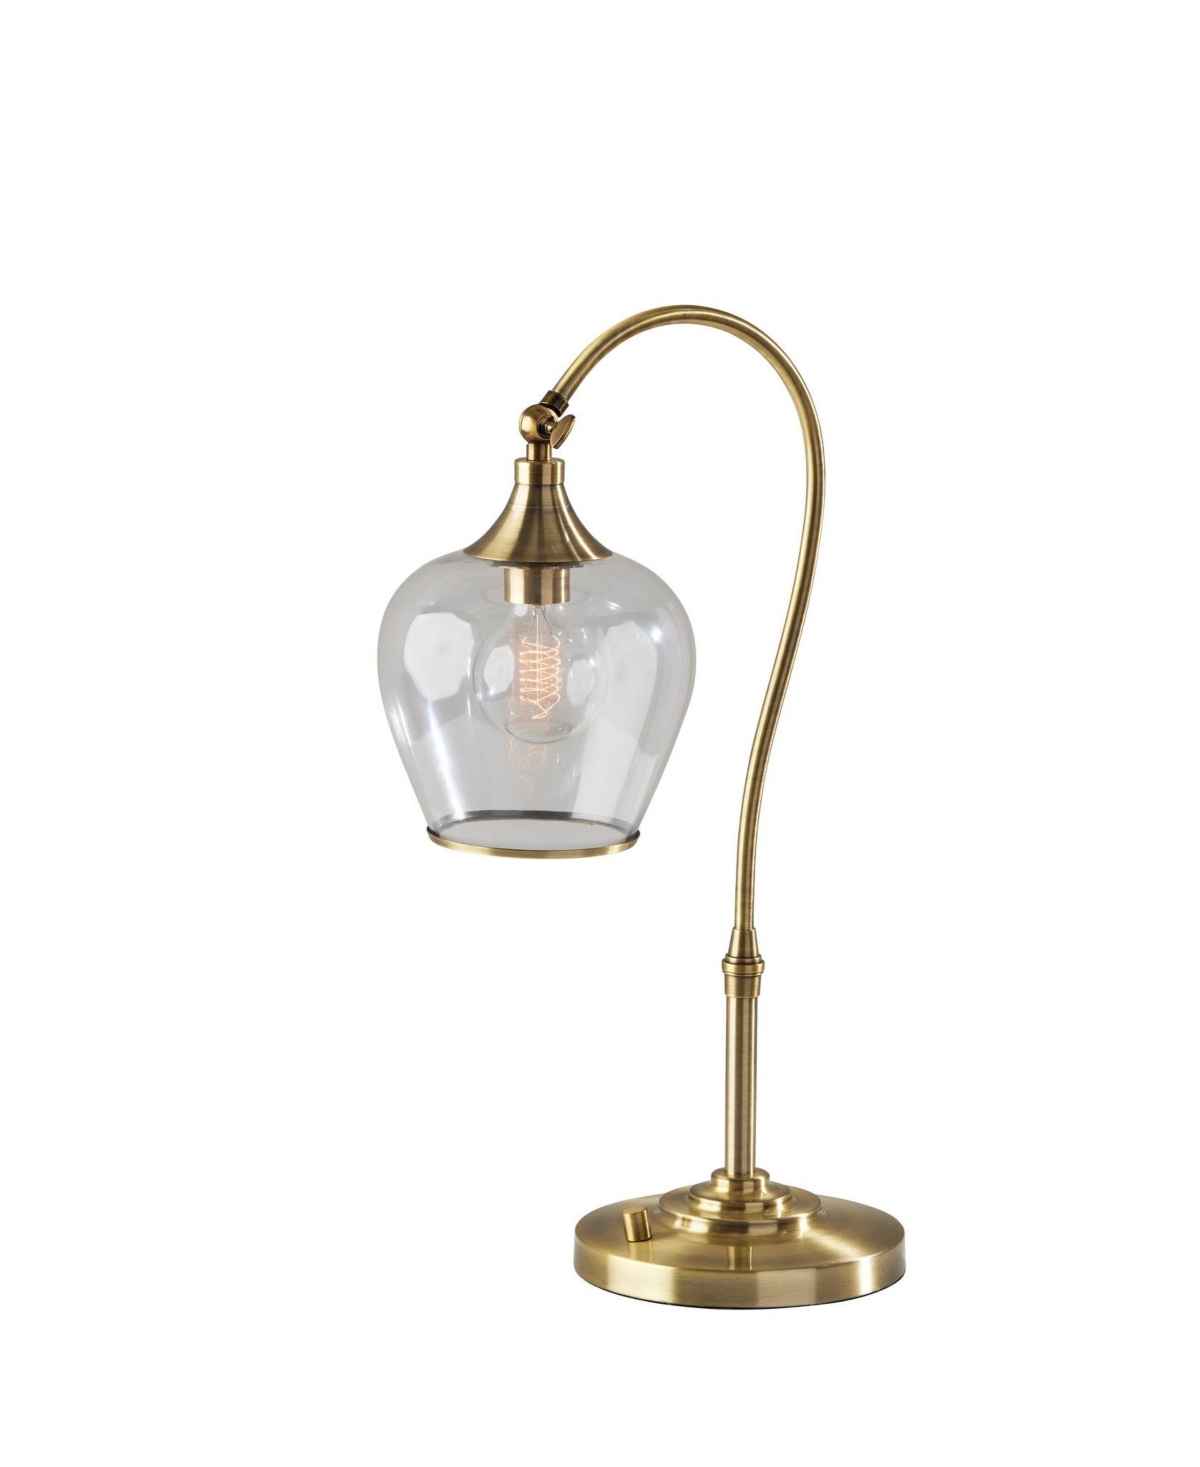 Adesso Bradford Desk Lamp In Antique-like Brass